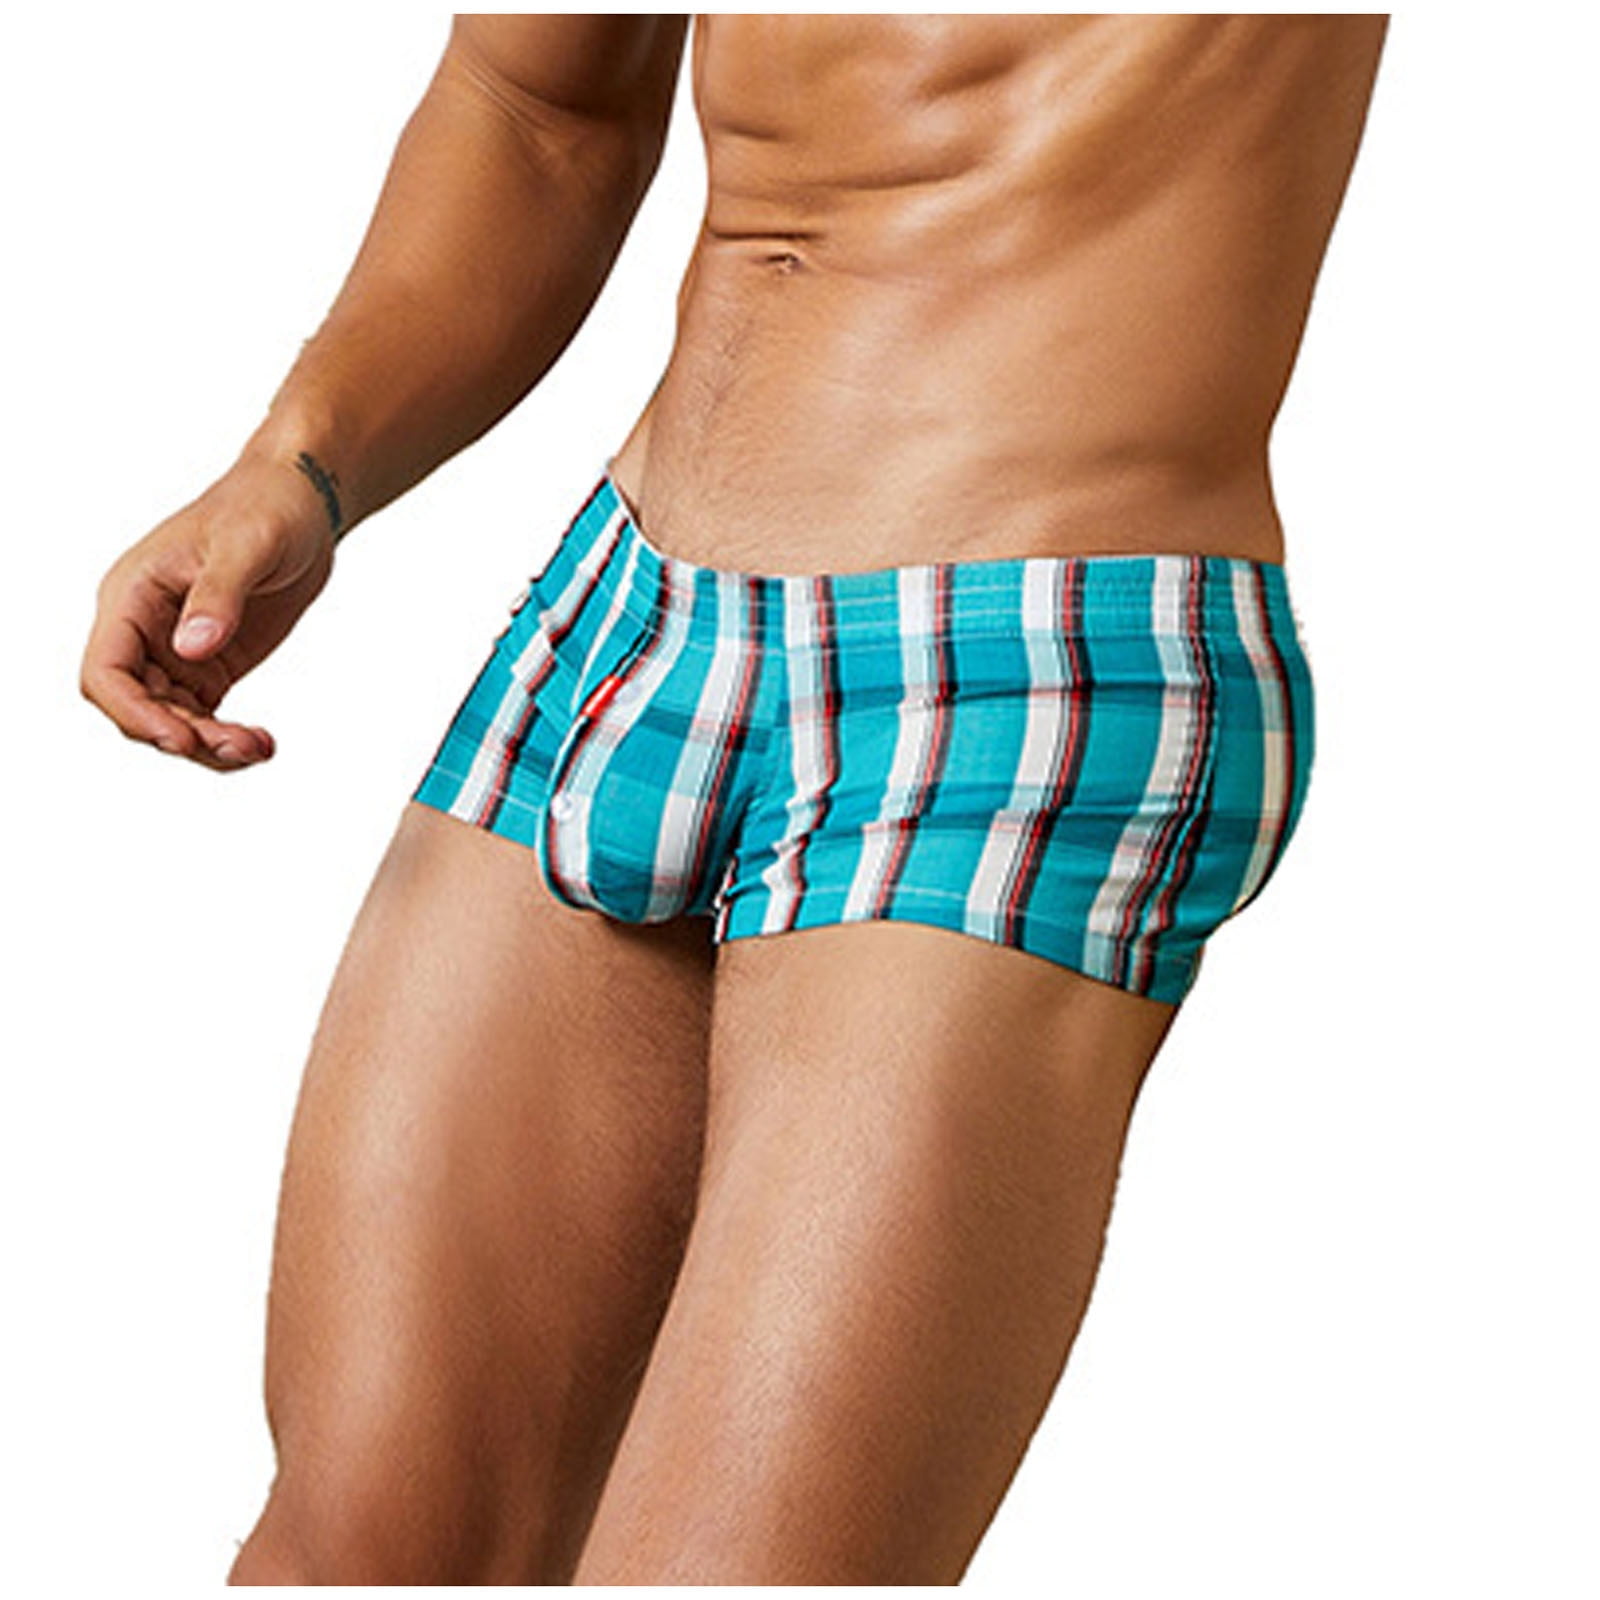 Loose Shorts Panties - Men's Boxer Briefs Fashion Stripes Breathable Panties Low Waist Narrow Side Shorts  Underwear Pants Boyshorts - Walmart.com